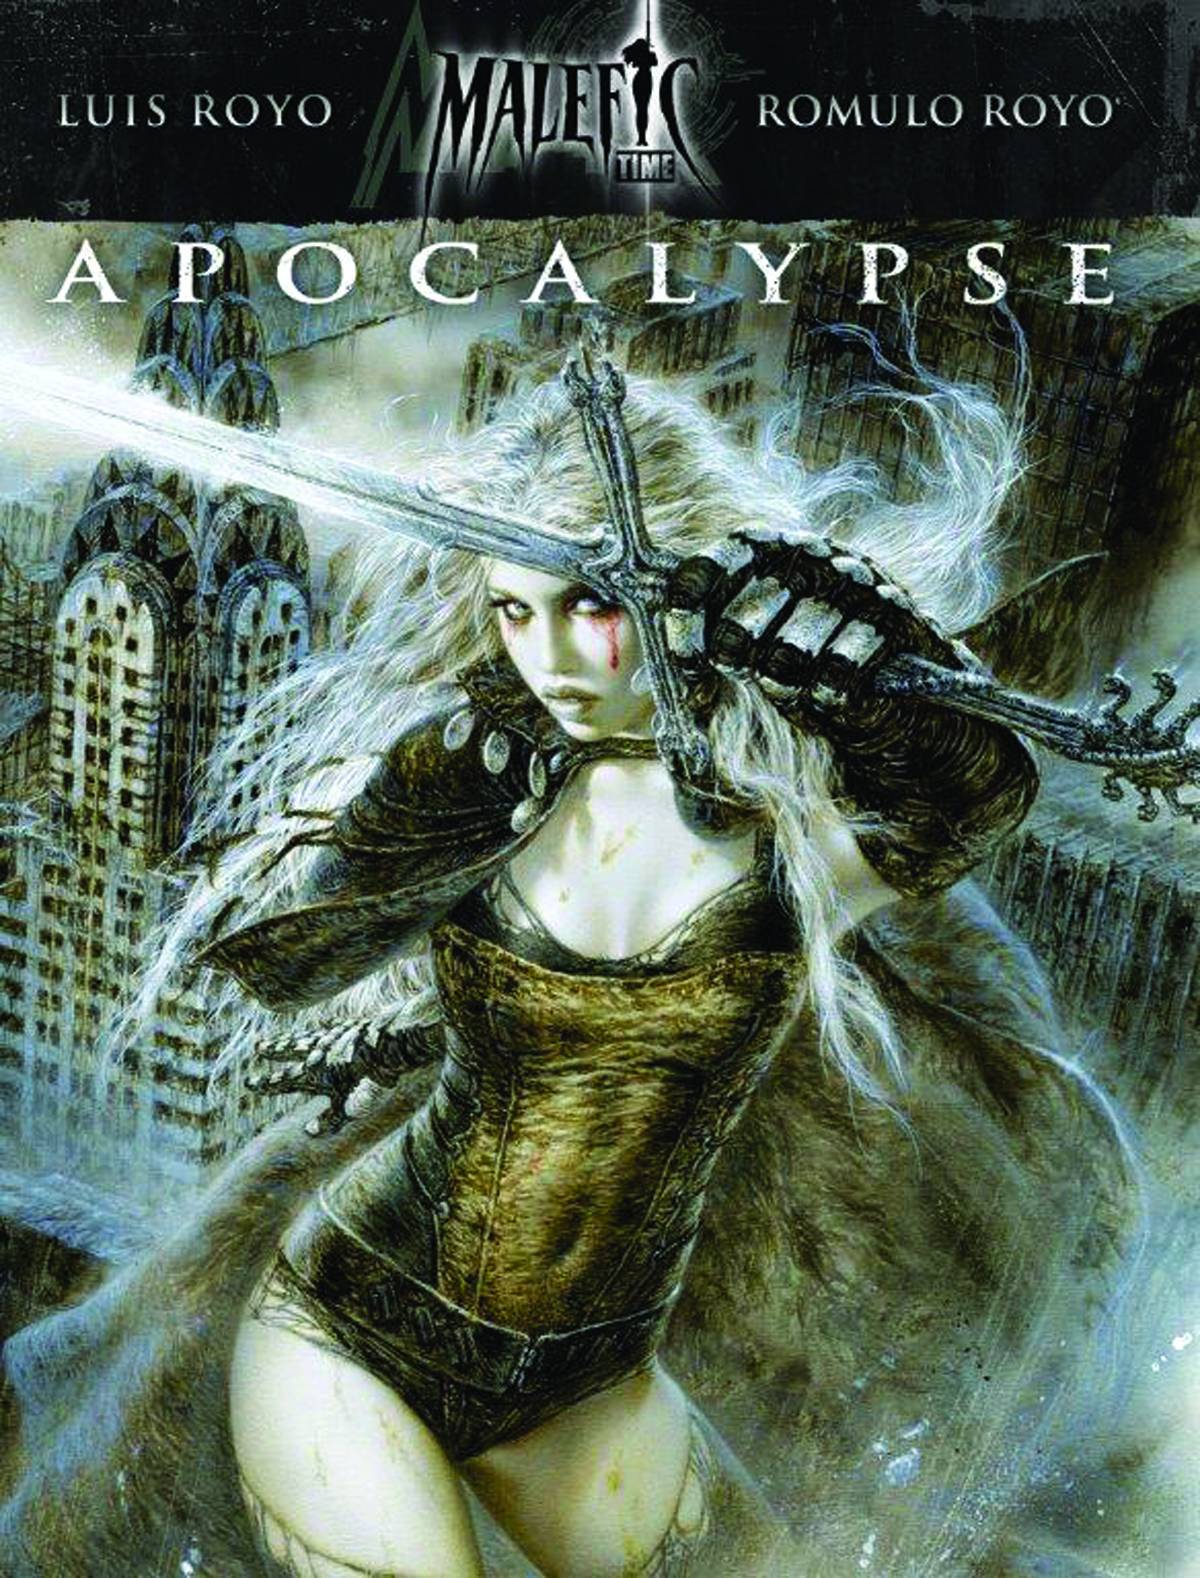 Luis Royo Malefic Time Apocalypse HC Vol 01